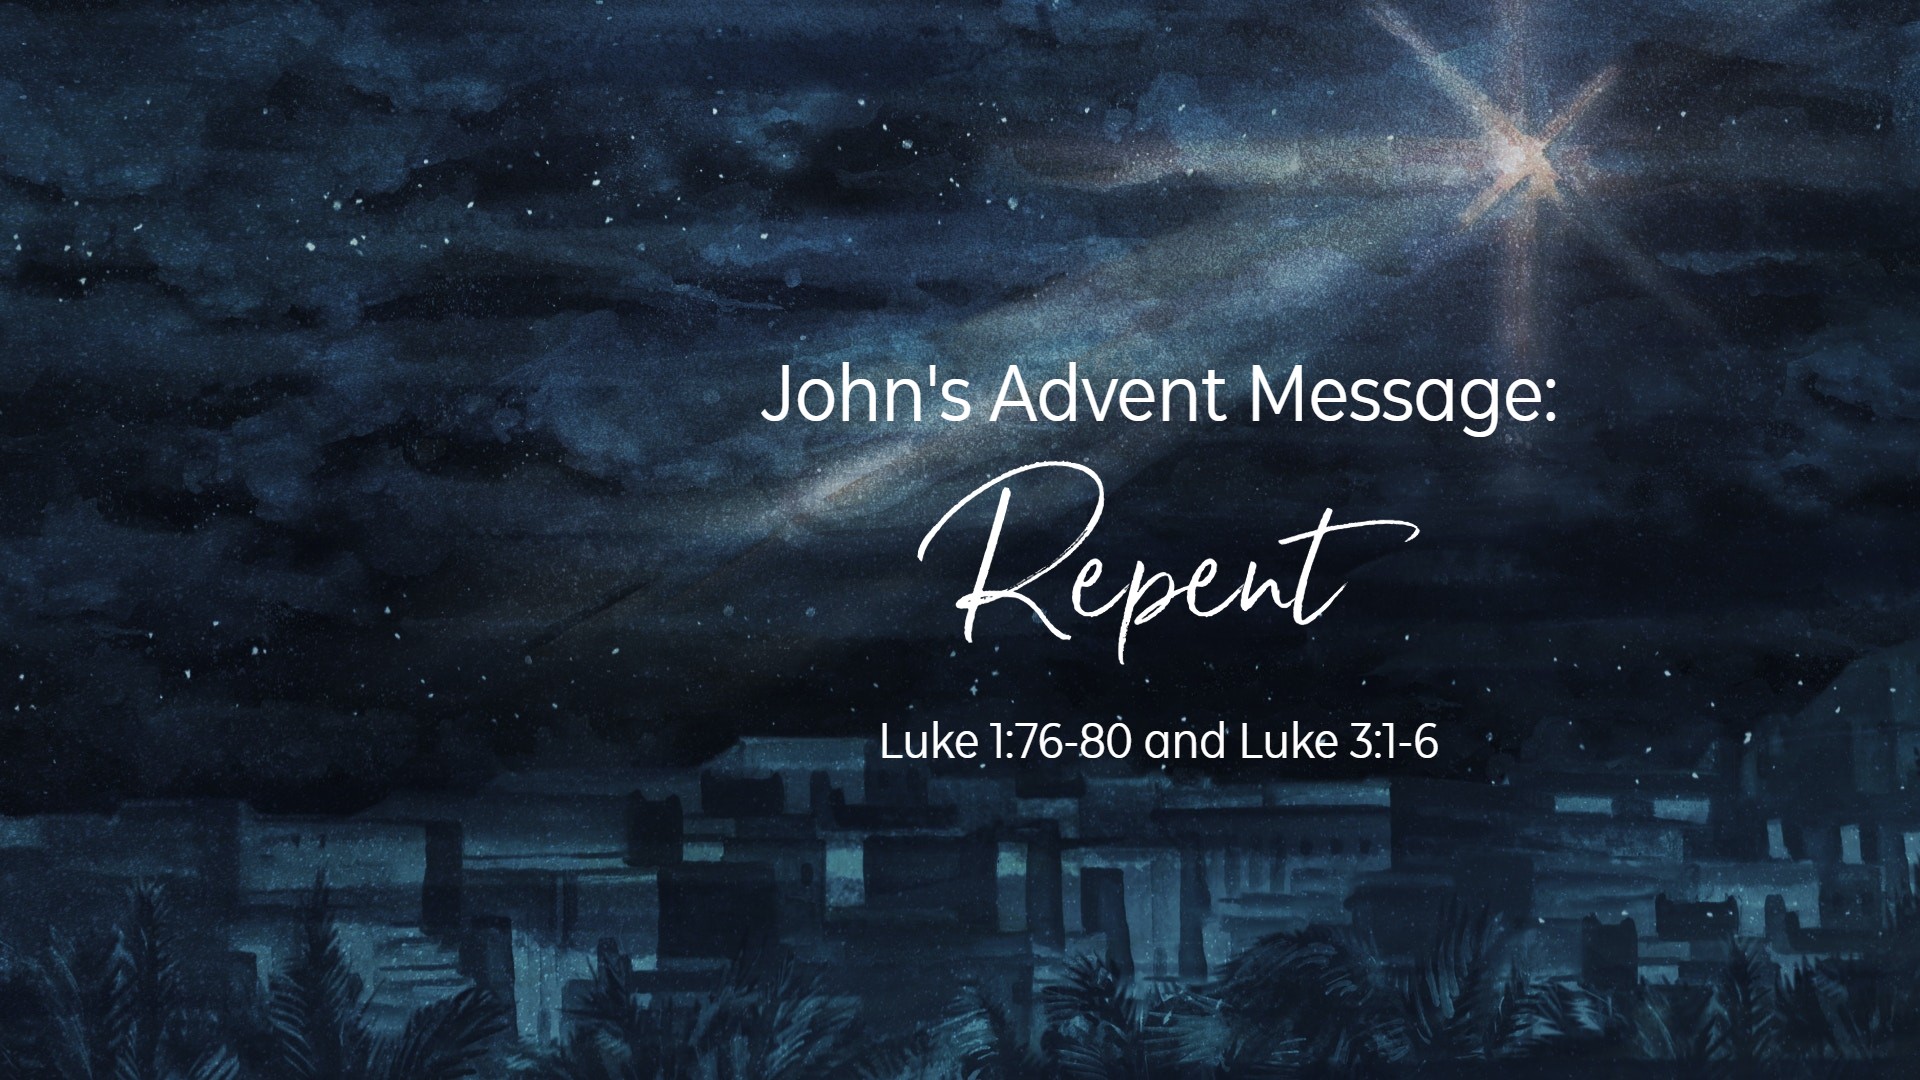 Bethlehem Repent